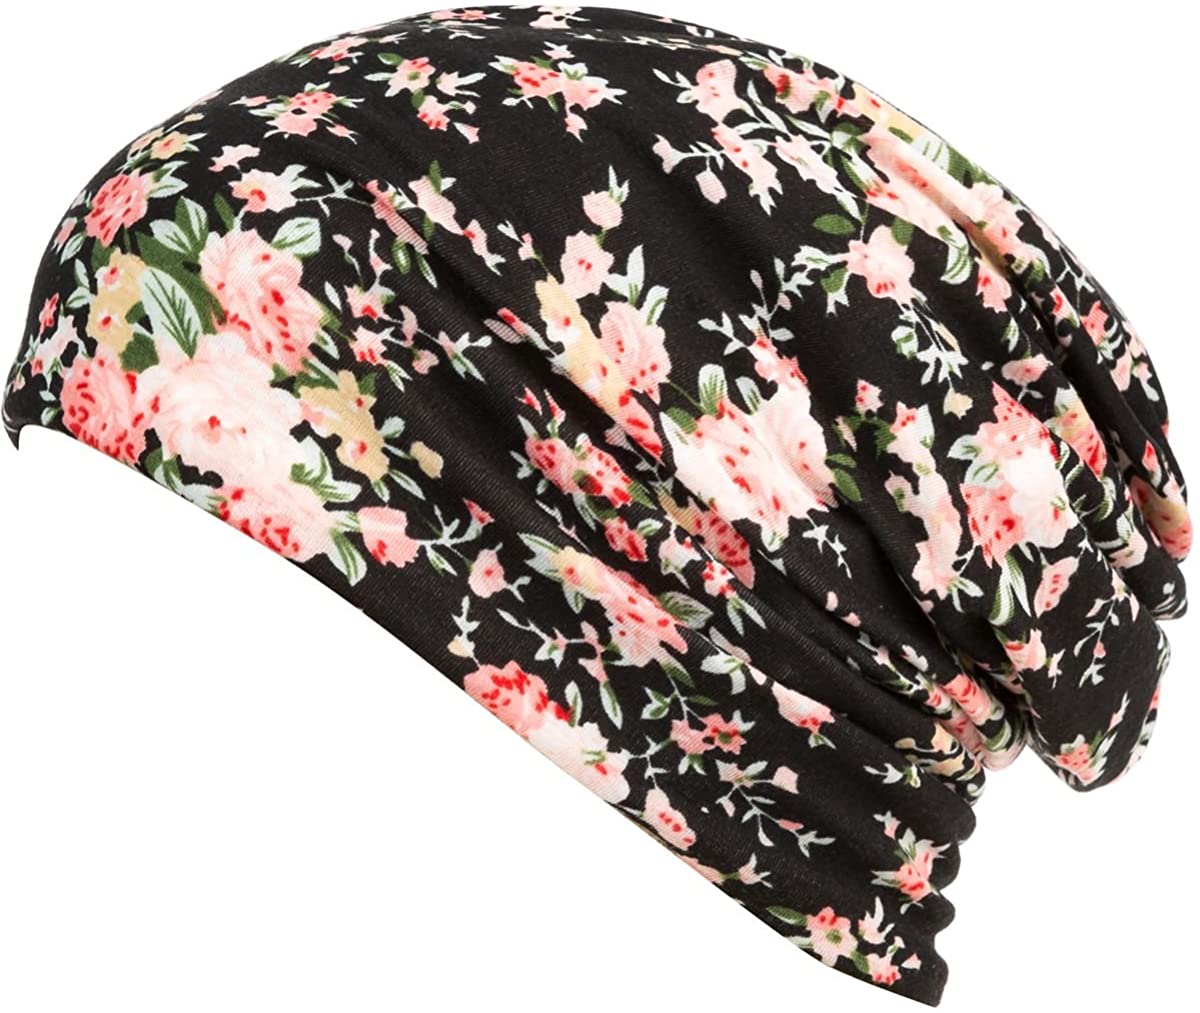 DancMolly Print Flower Cap Cancer Hats Beanie Stretch Casual Turbans for Women